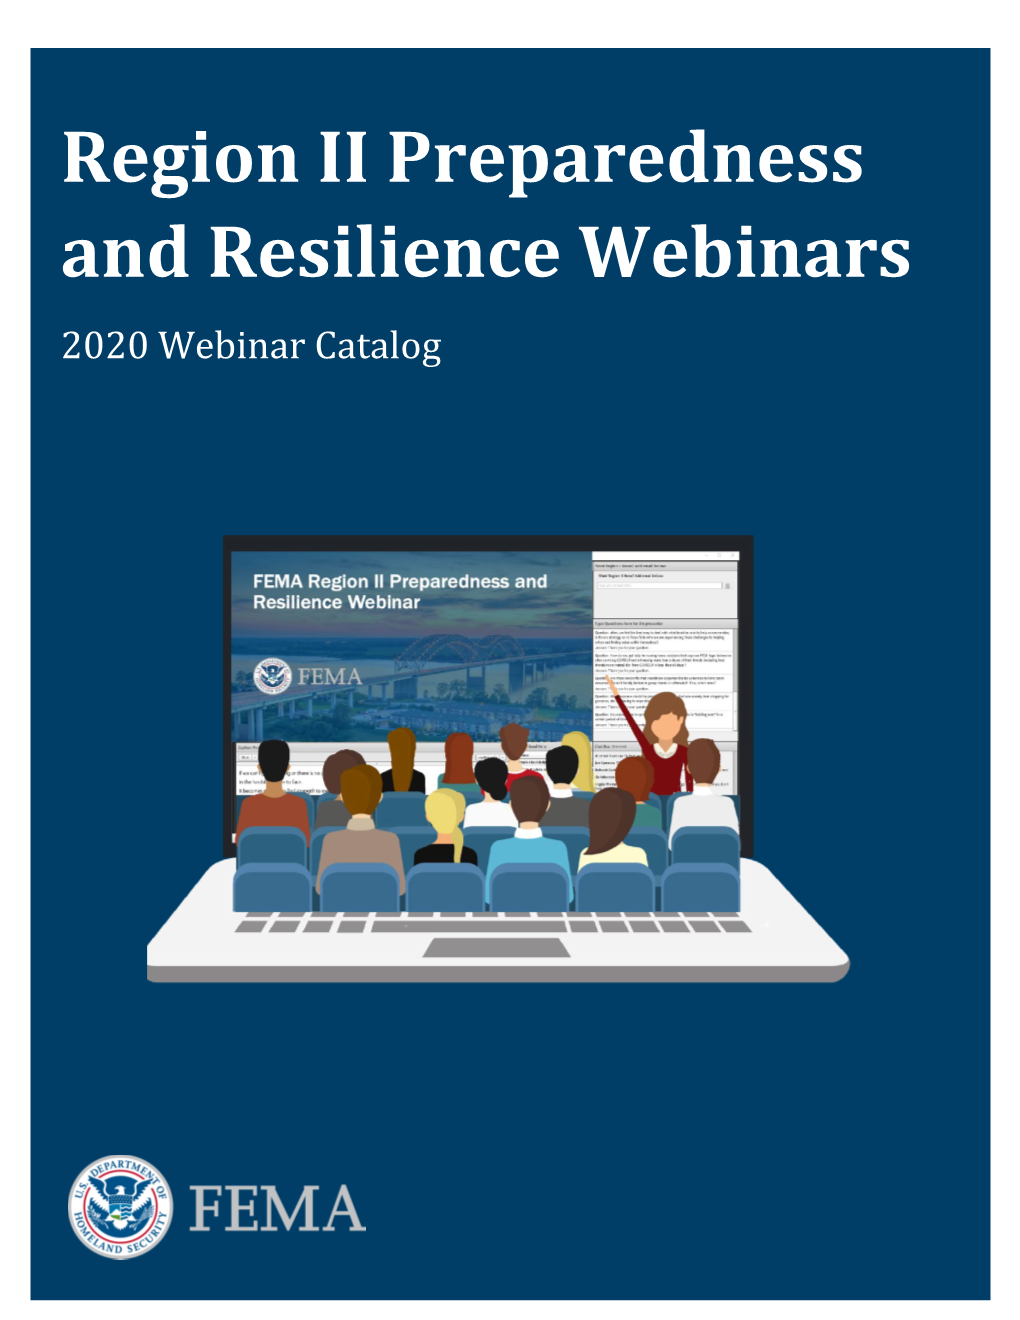 Region II 2020 Preparedness and Resilience Webinar Catalog